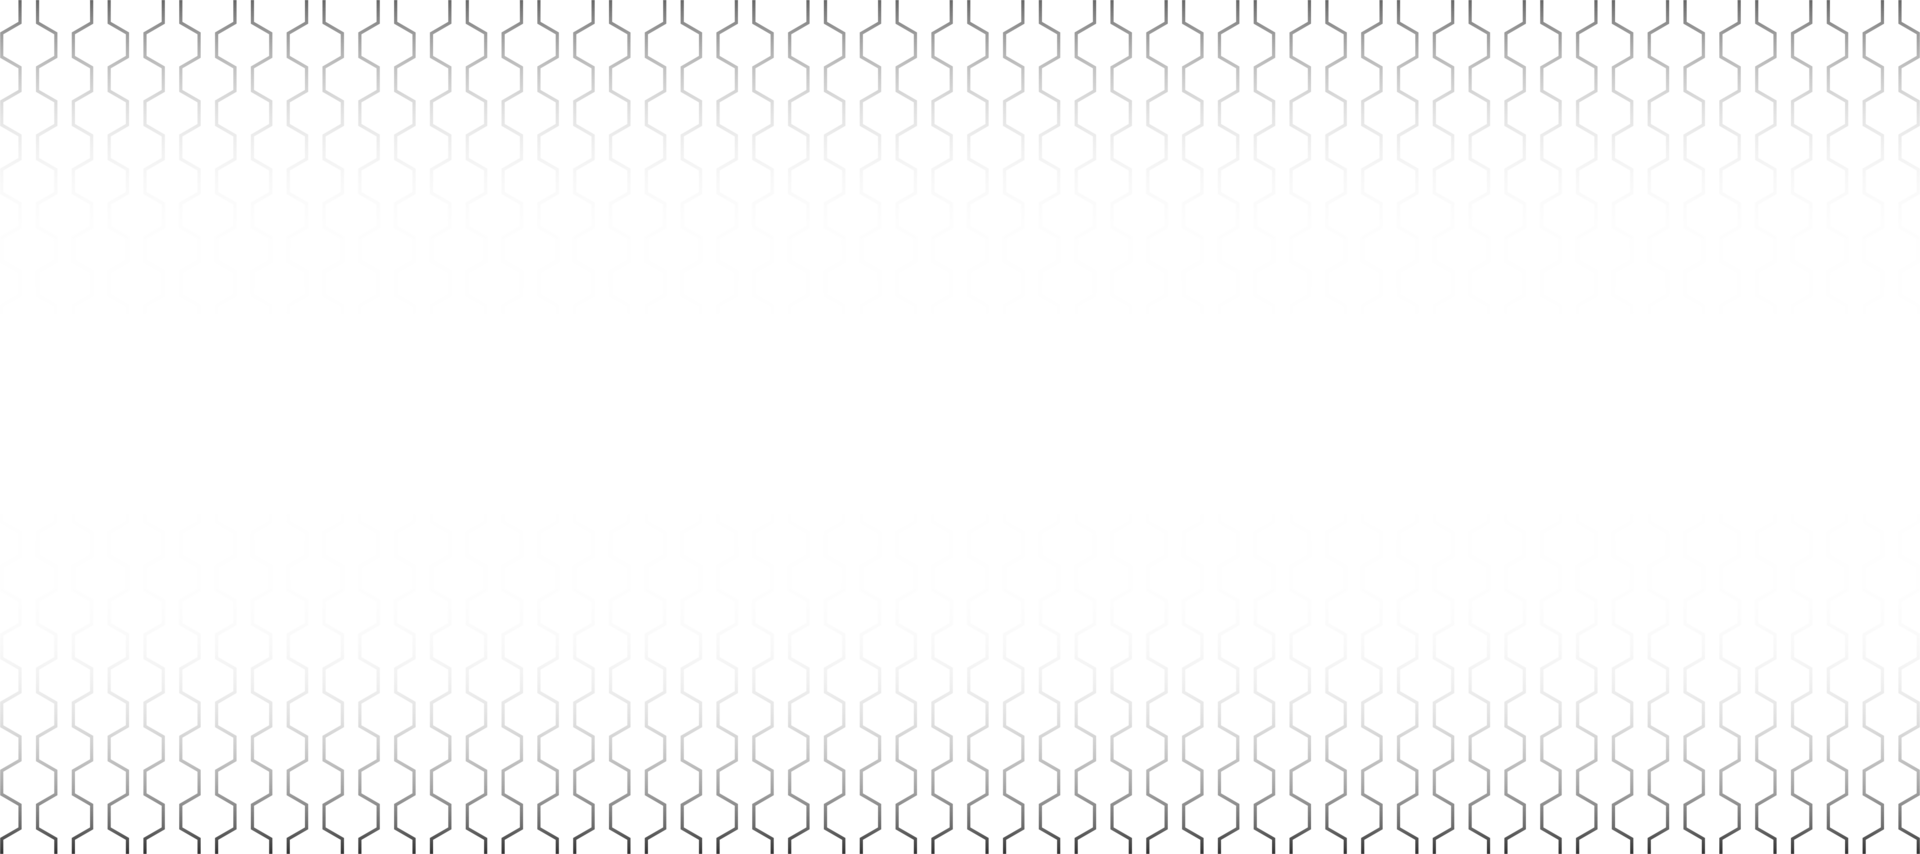 hexagonal black glossy chain metal net transparent background